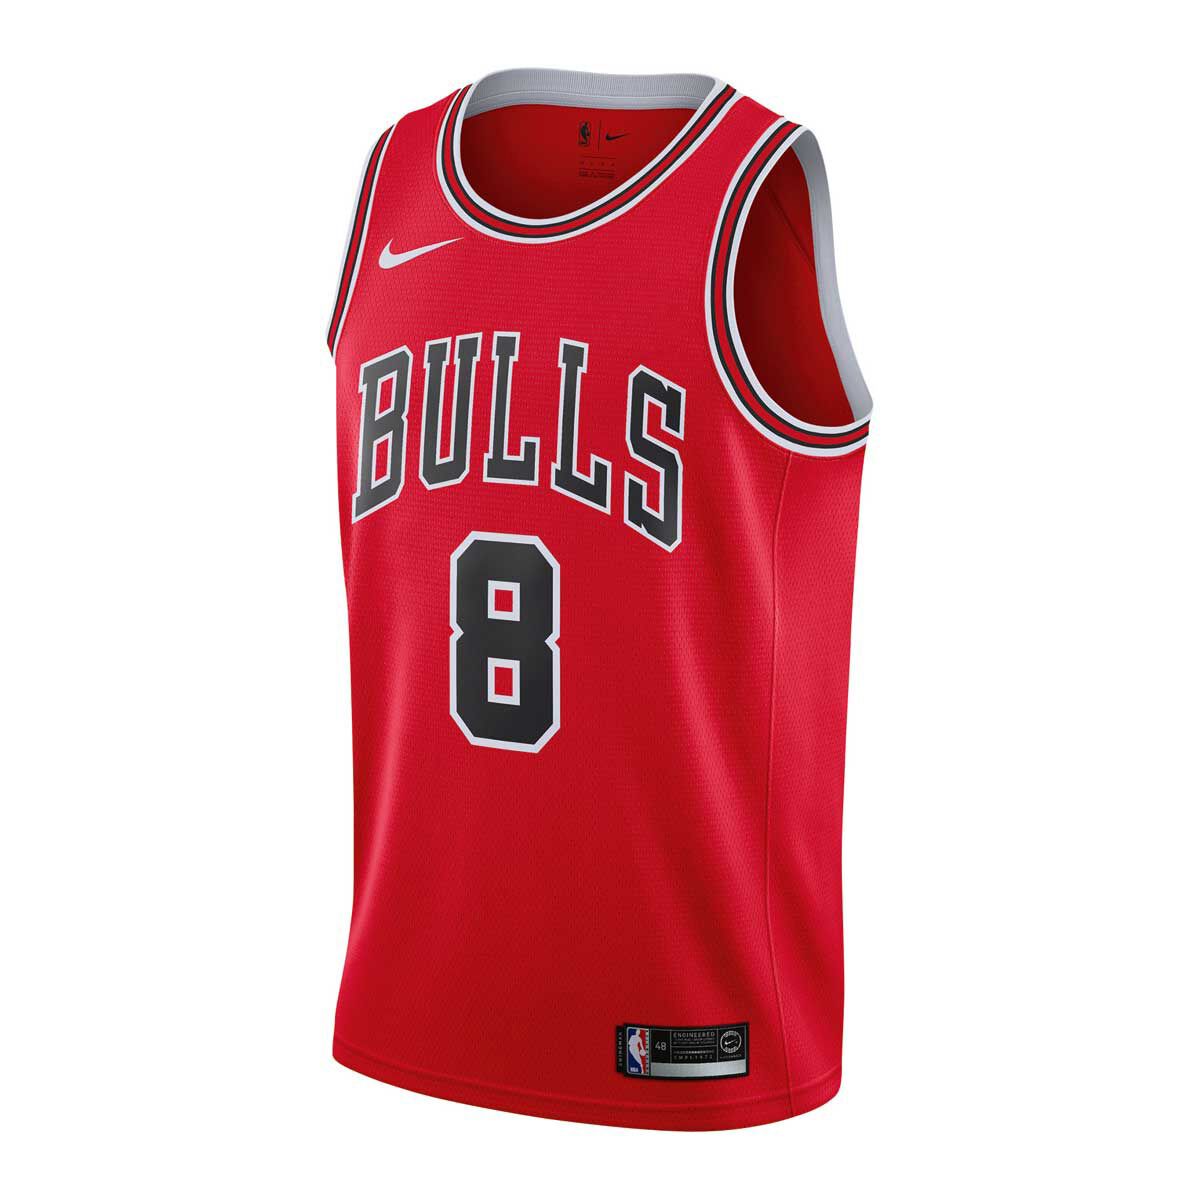 2019 bulls jersey